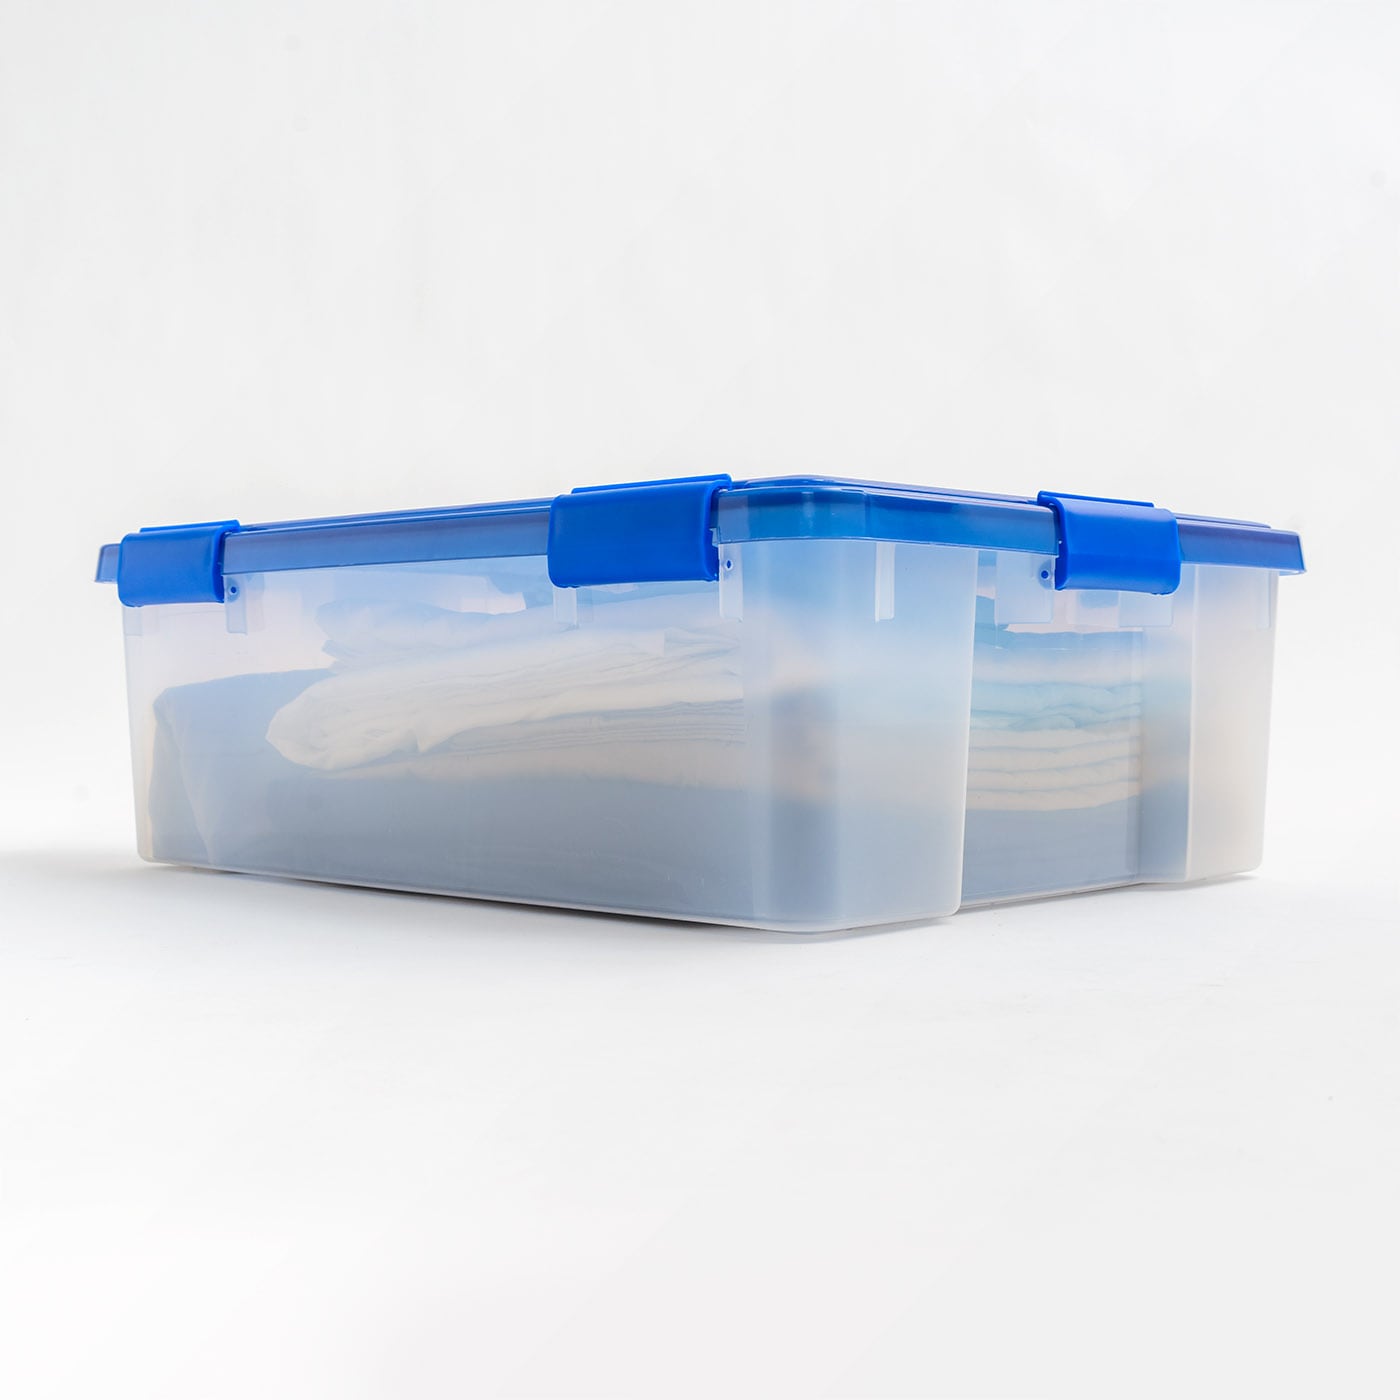 10-Inch Multipurpose Portable Storage Box - Clear Light Blue